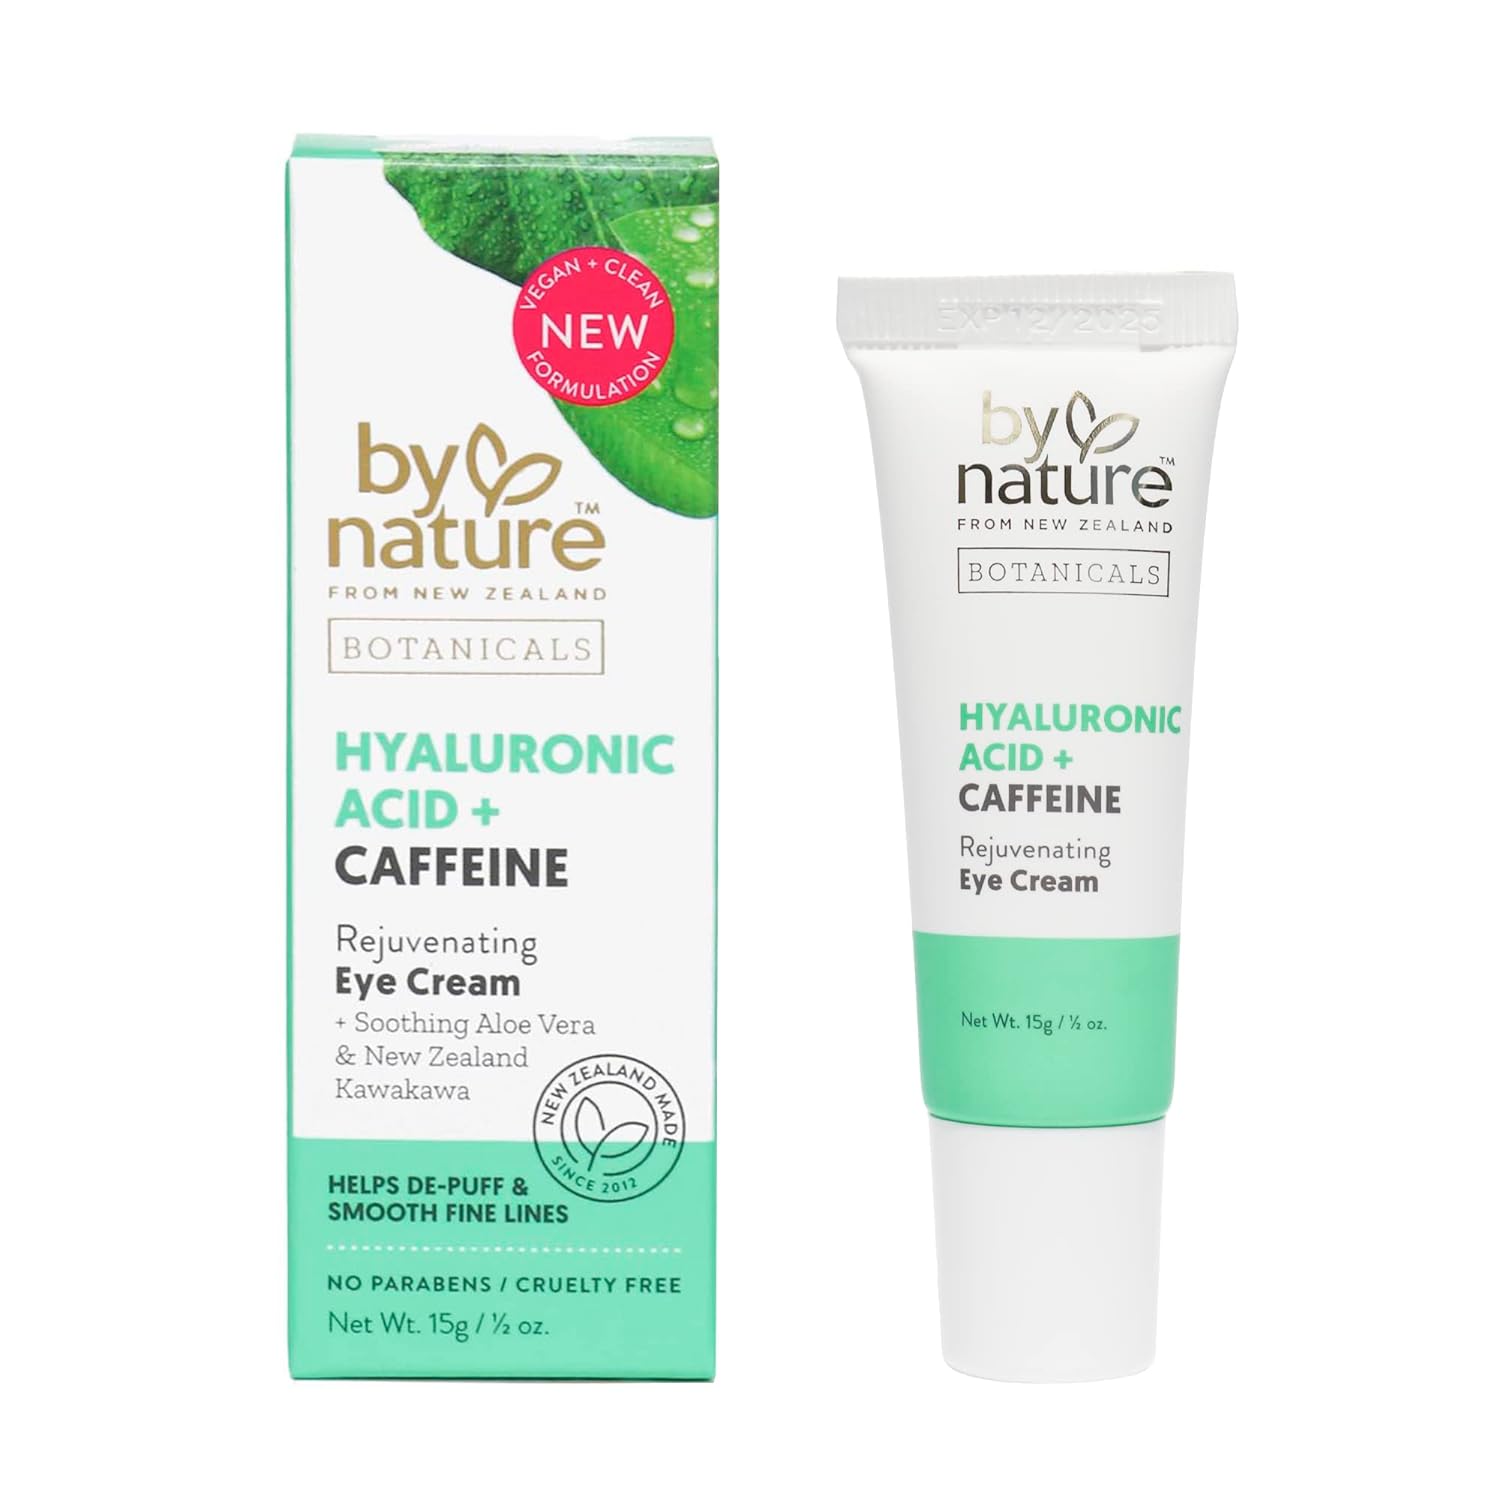 By Nature Botanicals Hyaluronic Acid & Caffeine Under Eye Cream - Firming & Refreshing Eye Cream for Dark Circles - Skincare from New Zealand - .5